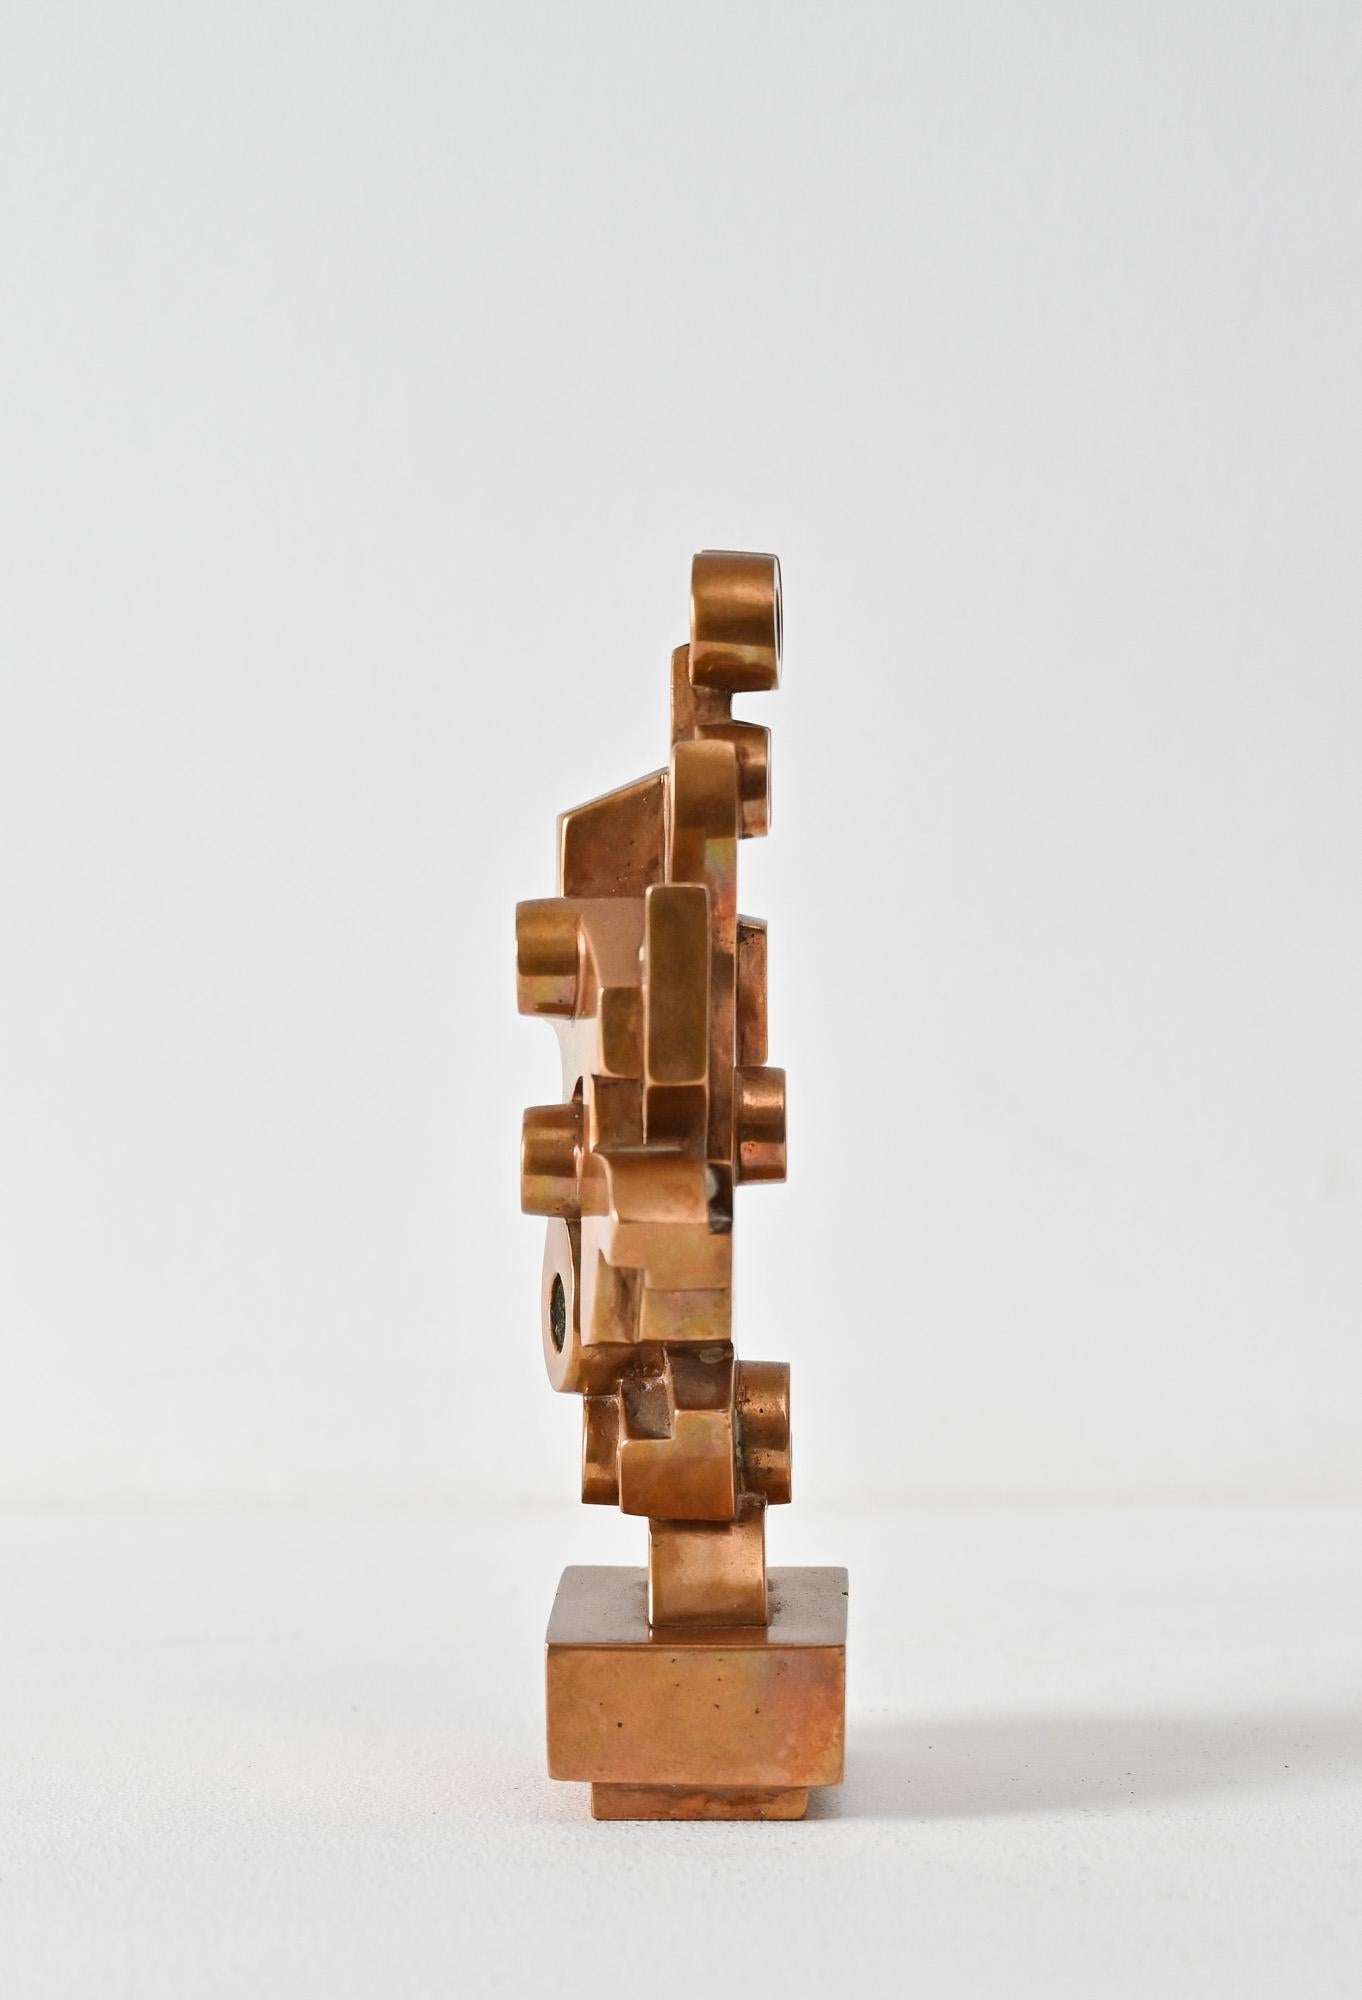 Futurist cast bronze abstract form 2 by Umberto Mastroianni